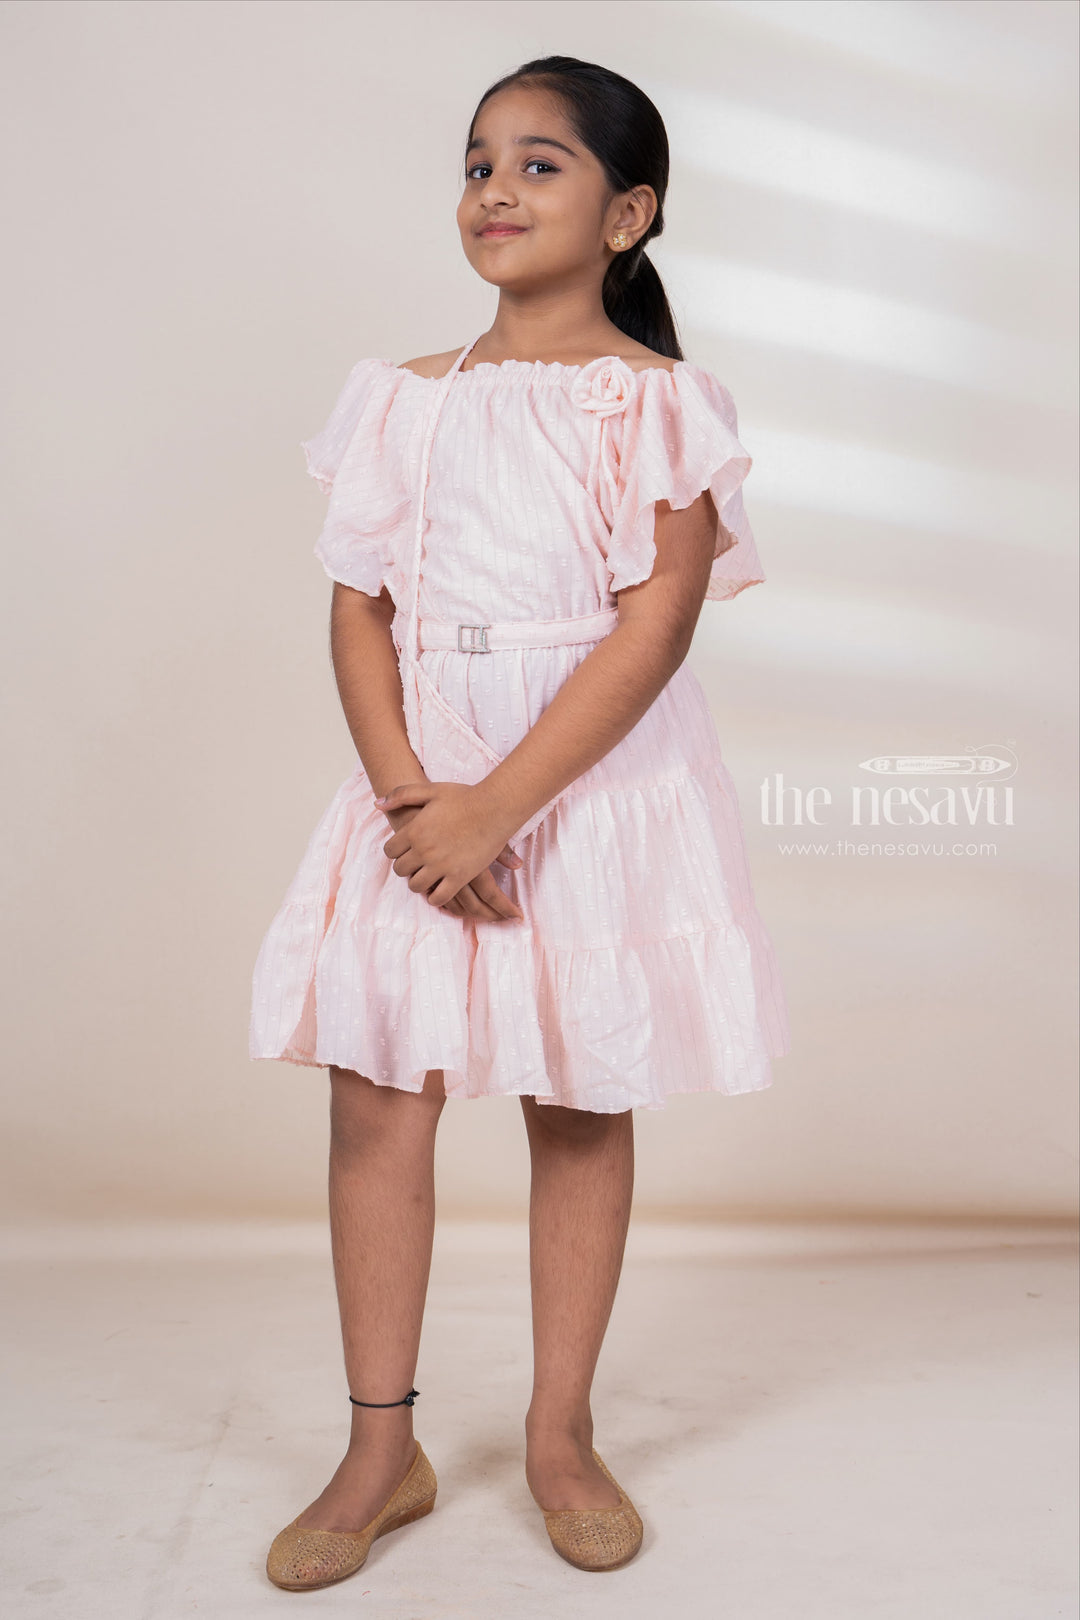 The Nesavu Frocks & Dresses Peach Off-Shoulder Designed Soft Cotton Frock For Baby Girls With Matching Bag psr silks Nesavu